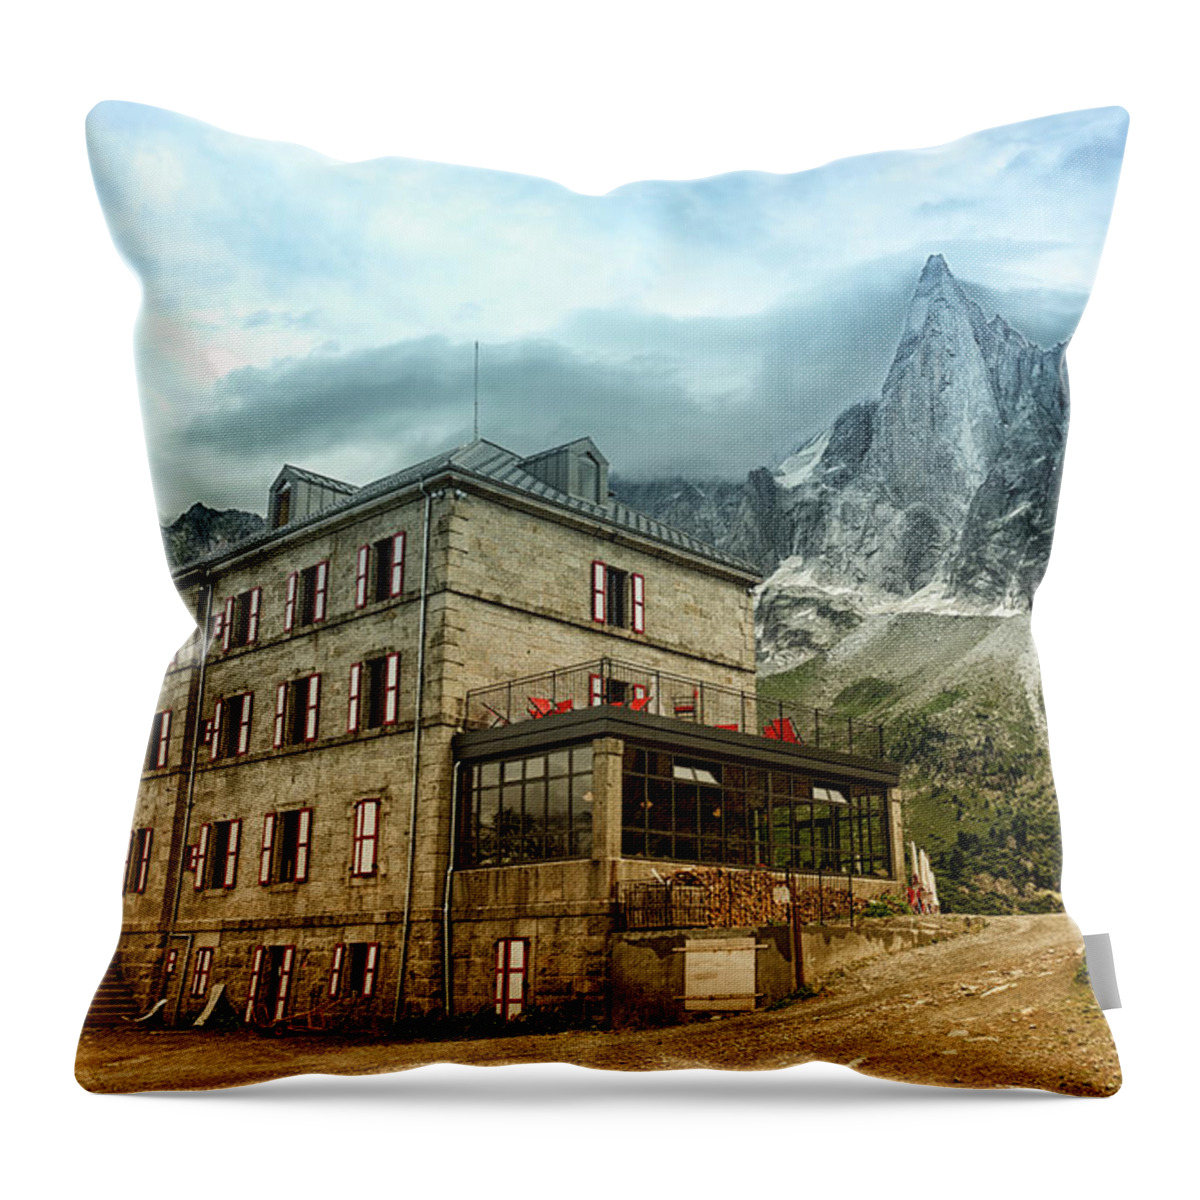 Grand Hotel Du Montenvers Throw Pillow featuring the photograph Grand Hotel du Montenvers by Chris Boulton